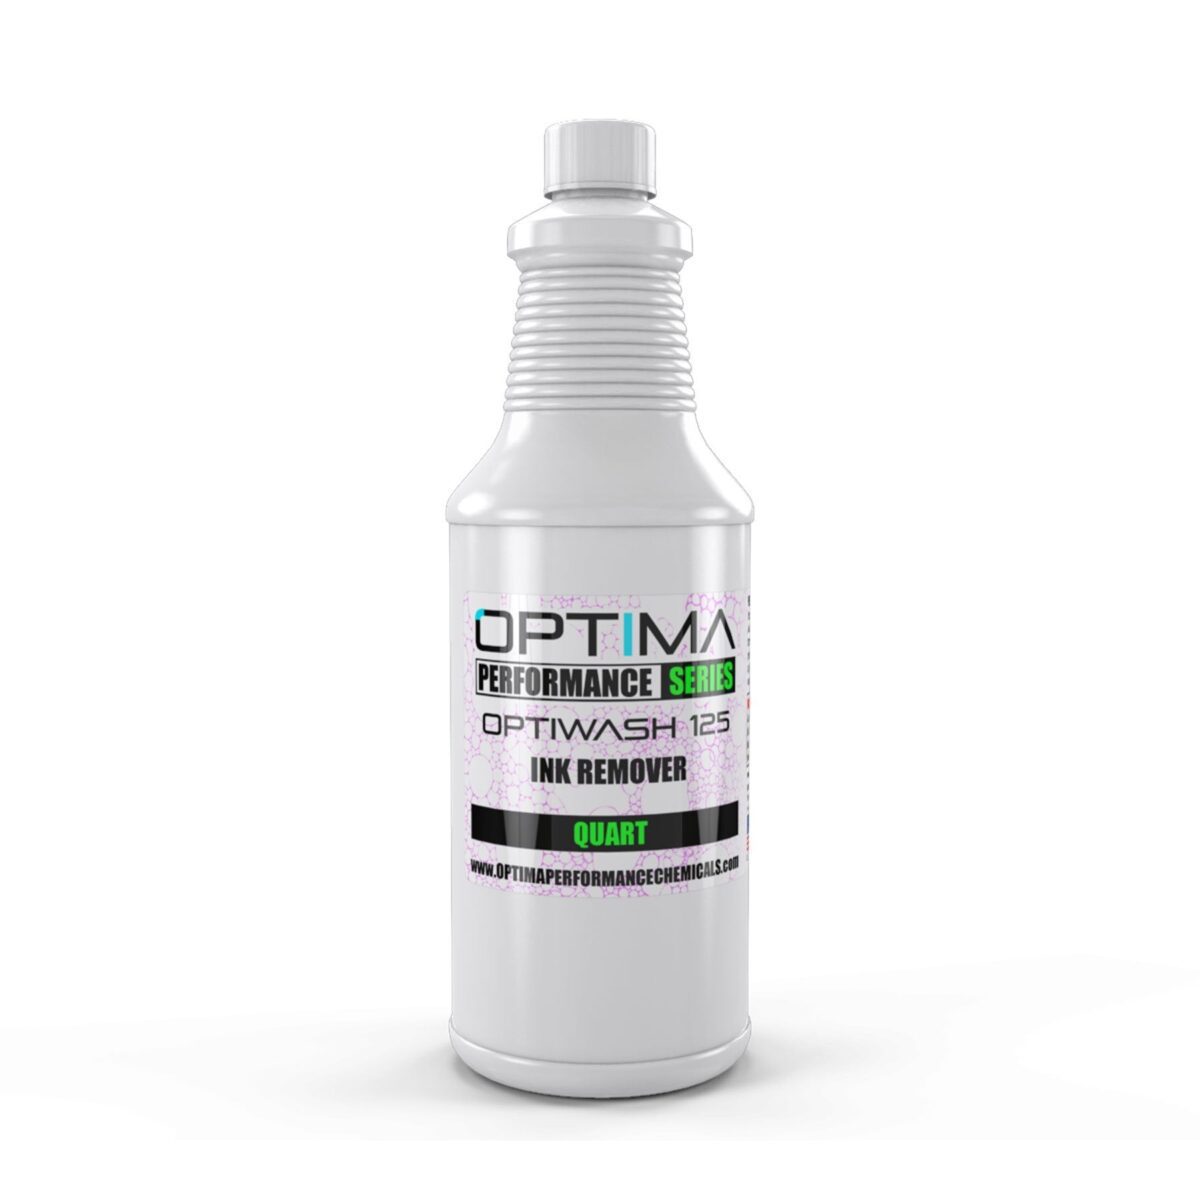 Opti-wash 125 - Ink Remover OPTIMA PERFORMANCE SERIES®